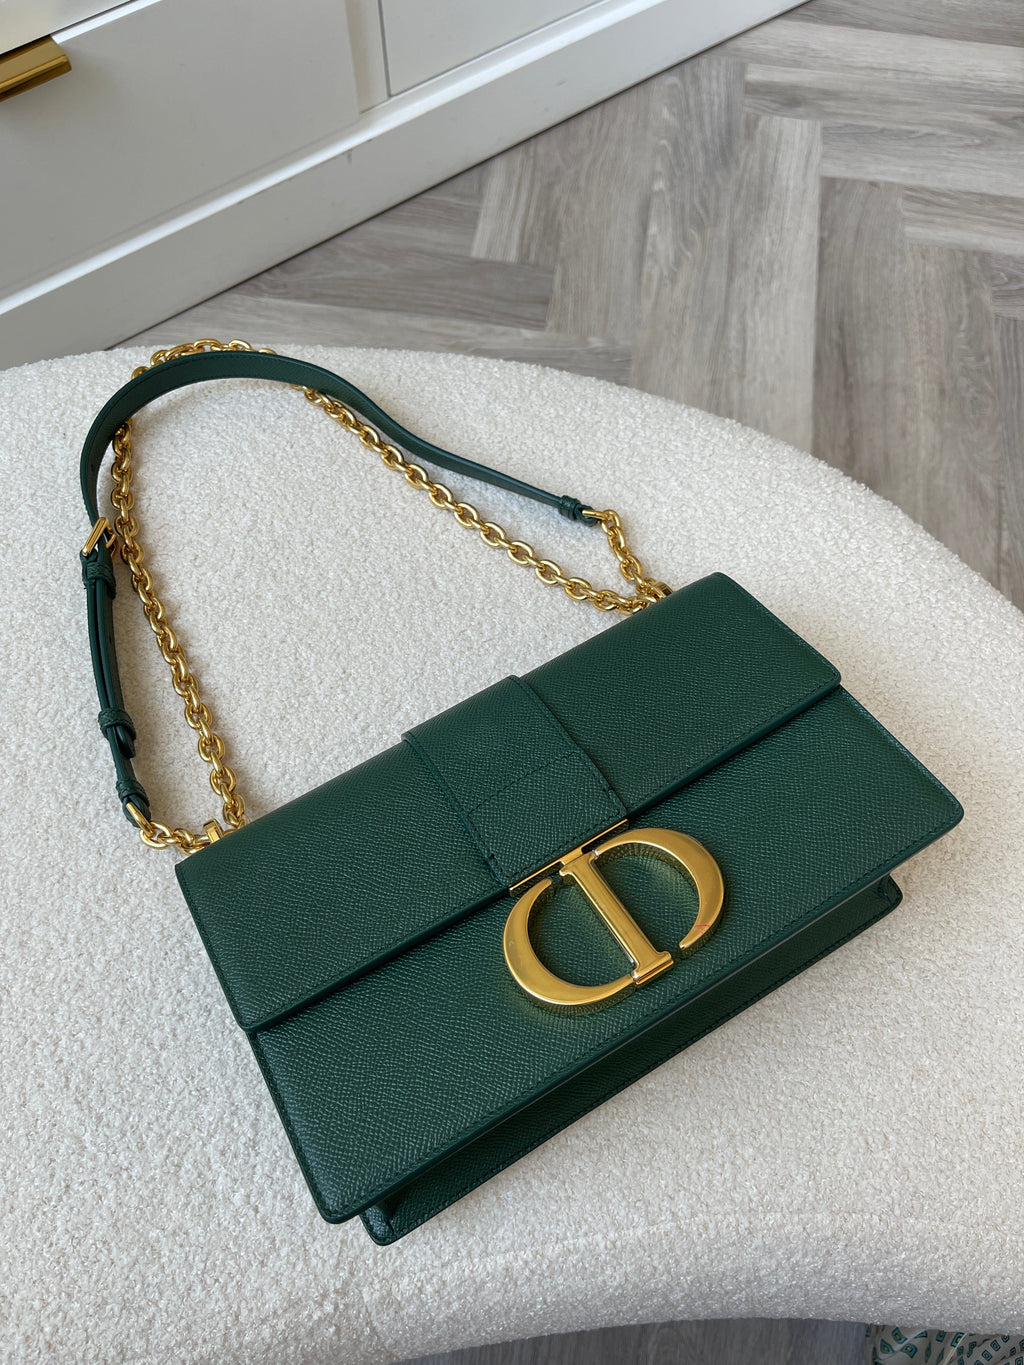 Dior 30 Montaigne Bag | 3D Model Collection